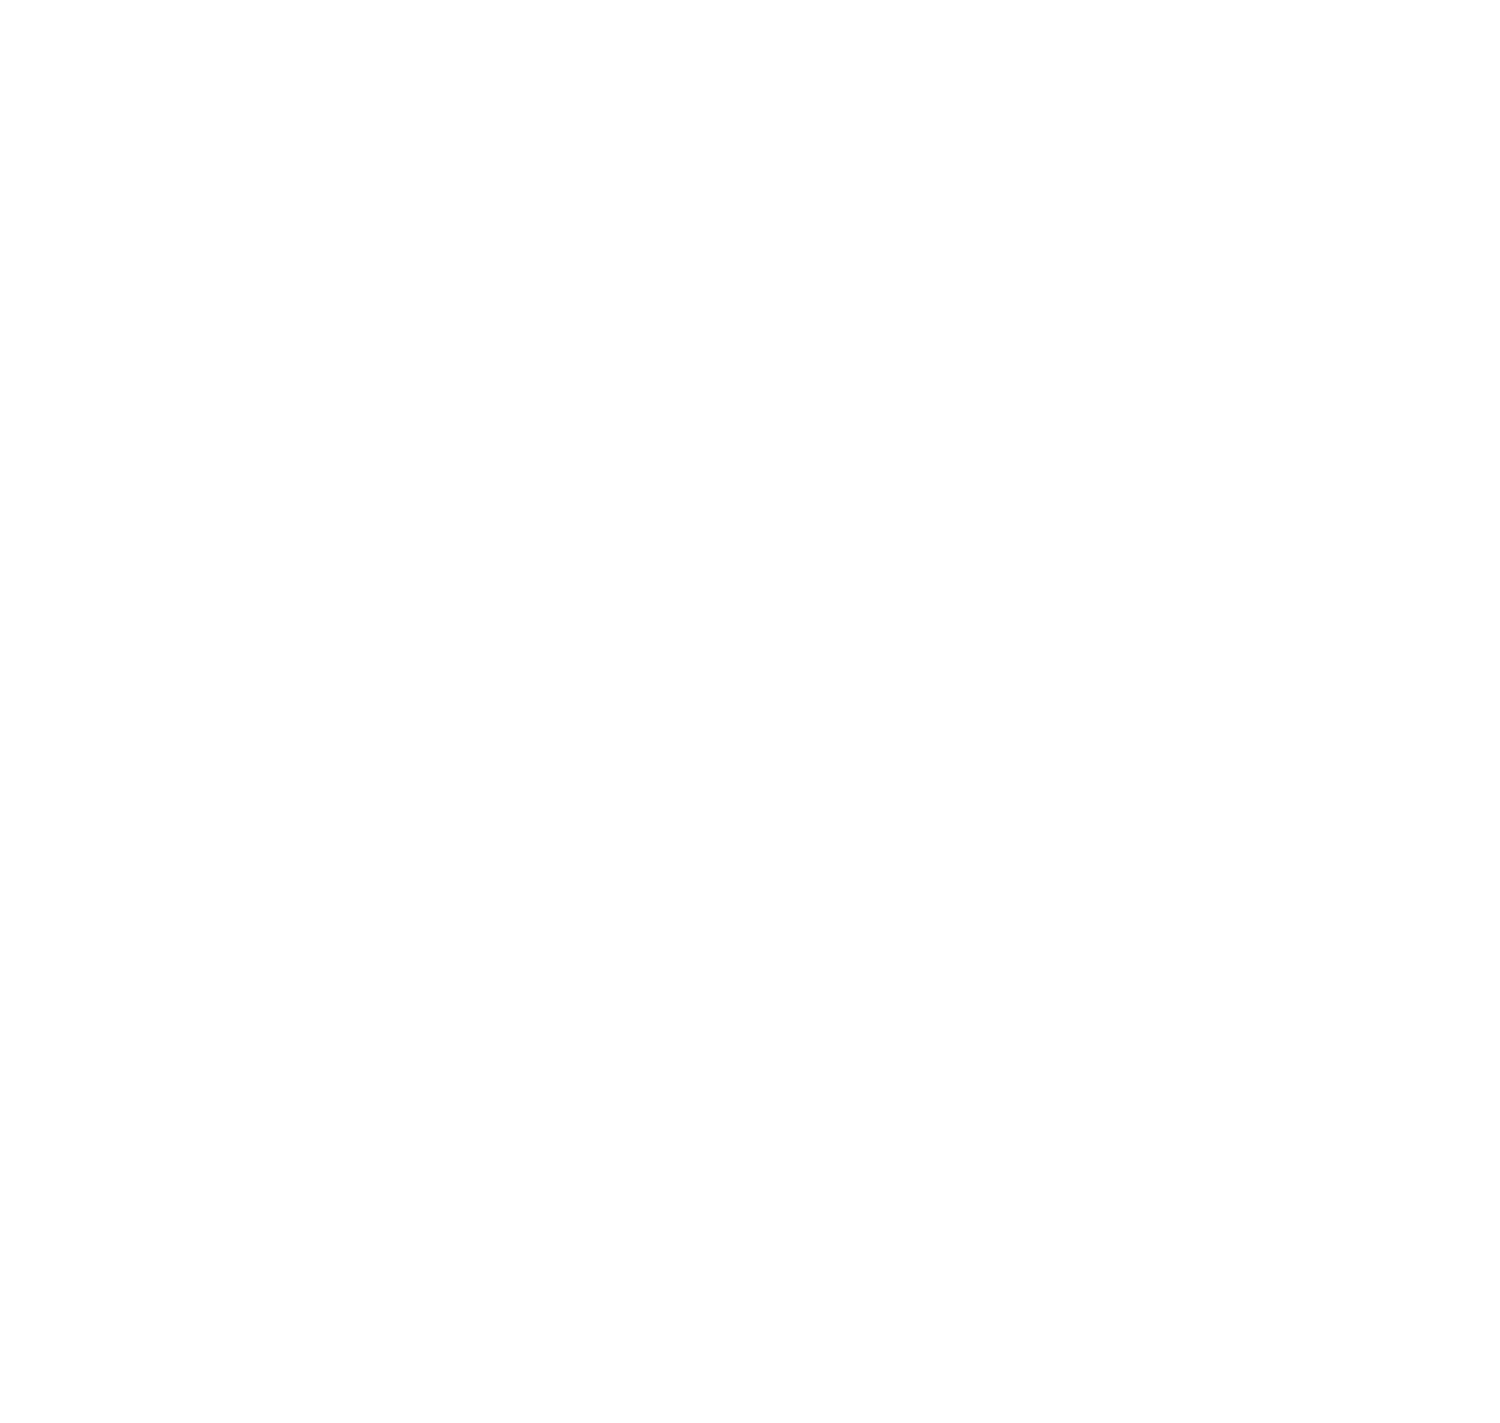 The Coffee Grinder